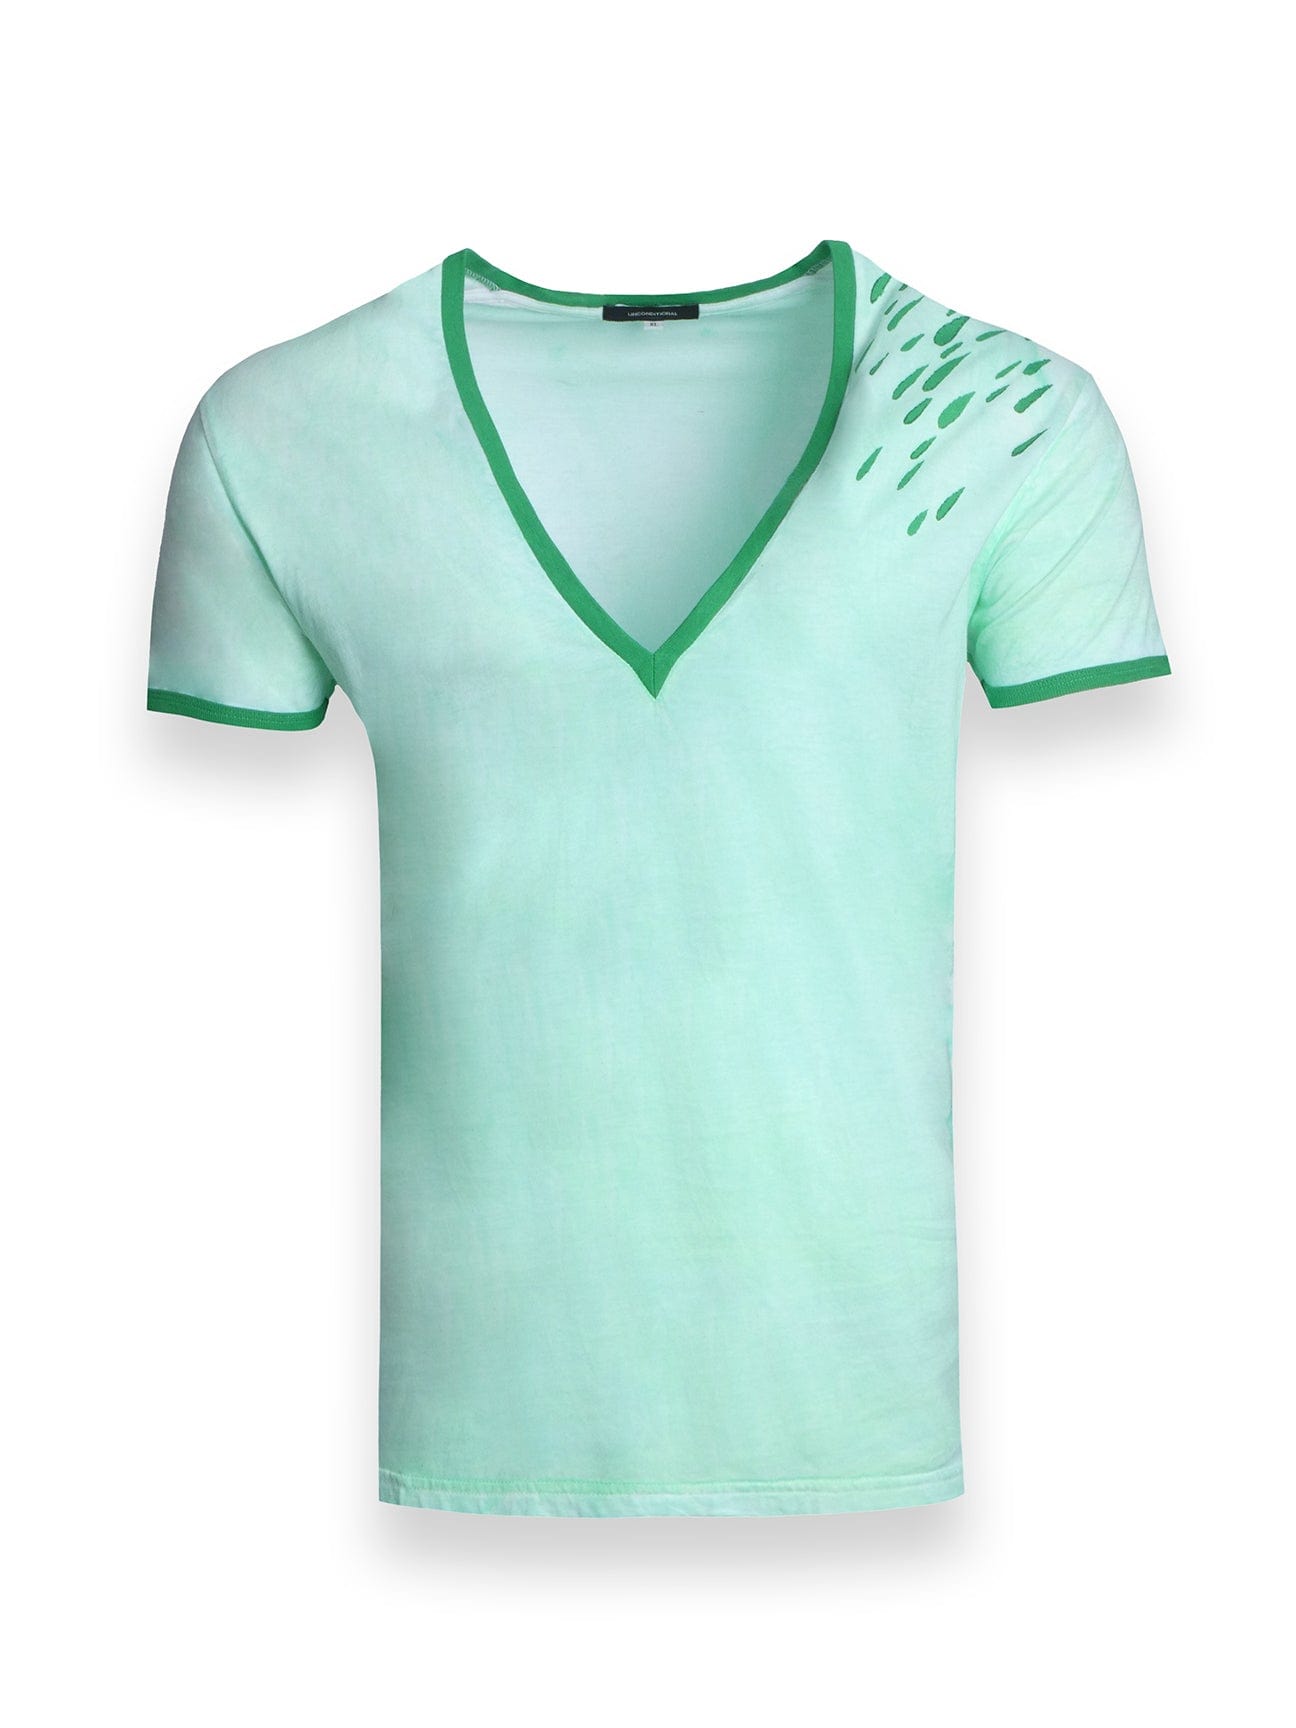 Aqua Coloured T-Shirt With Green Splash Details